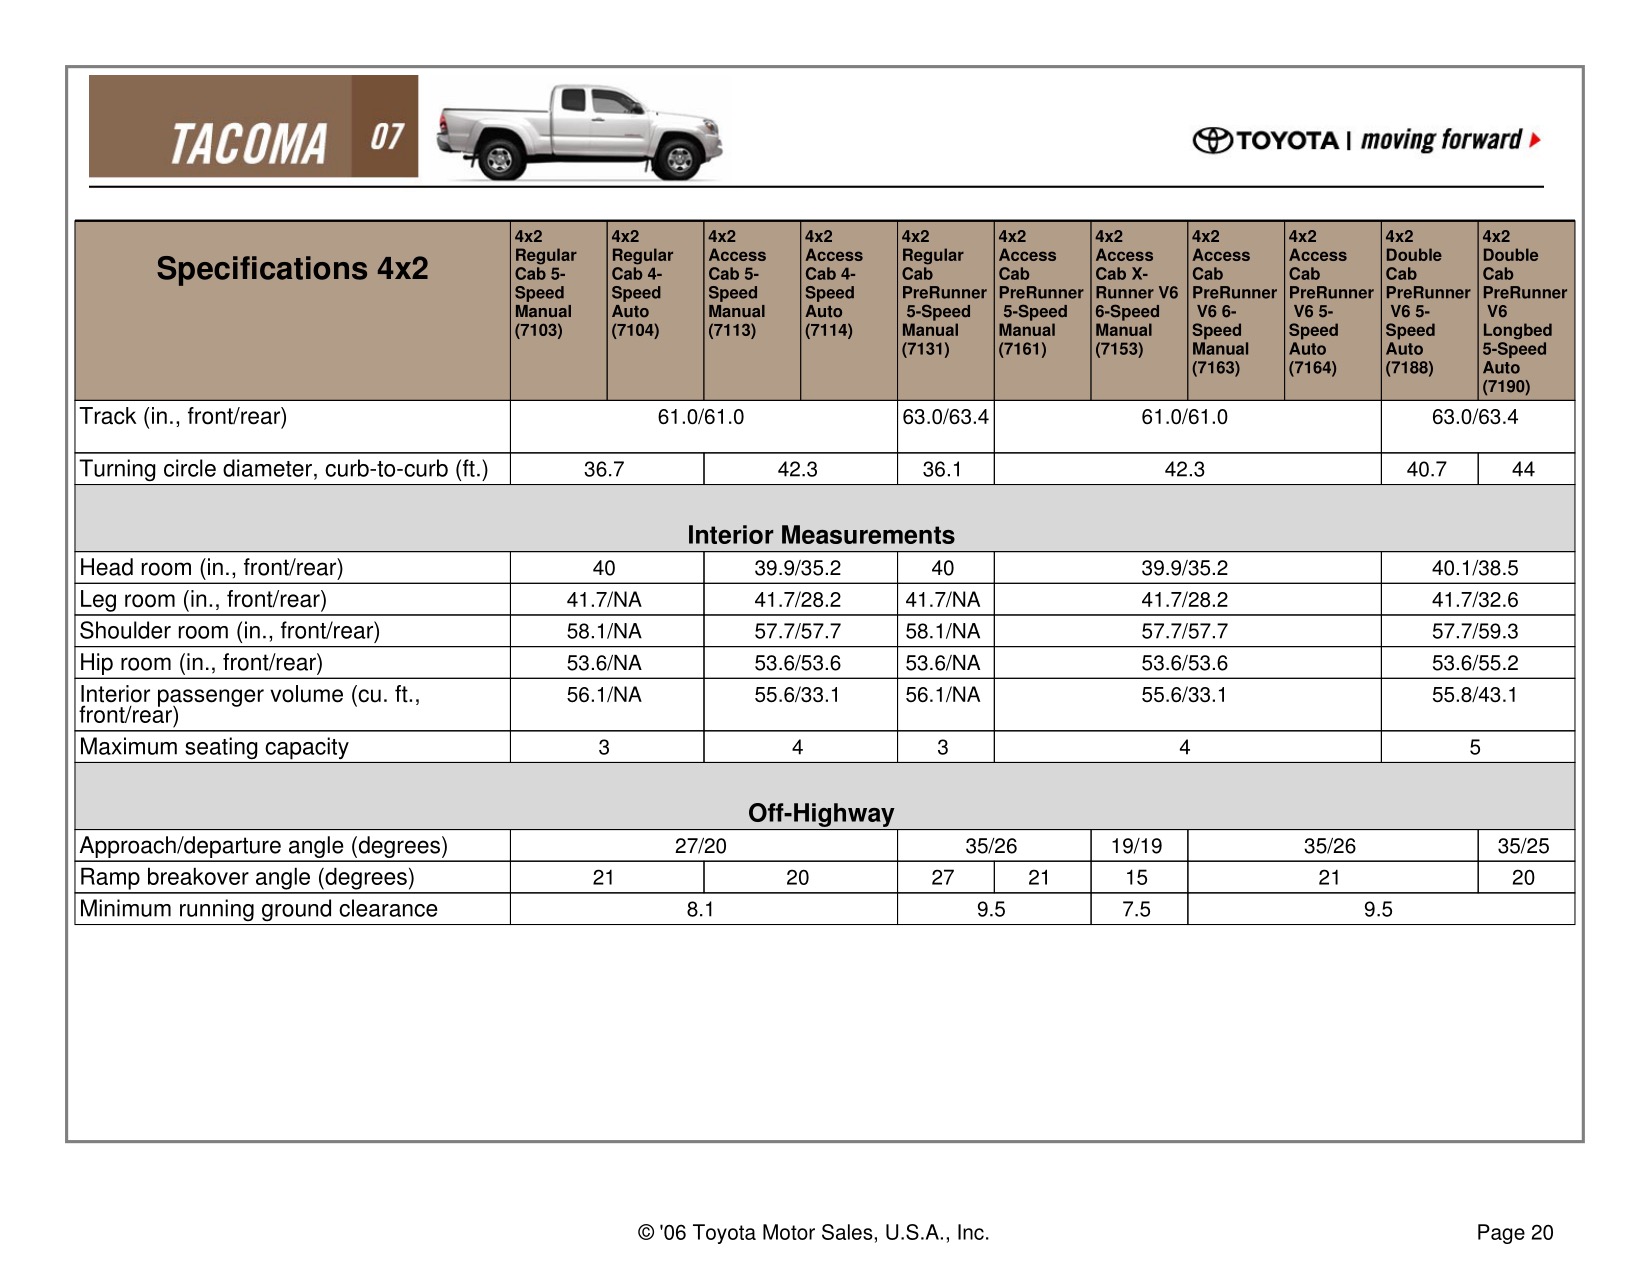 2007 Toyota Tacoma 4x2 Brochure Page 20